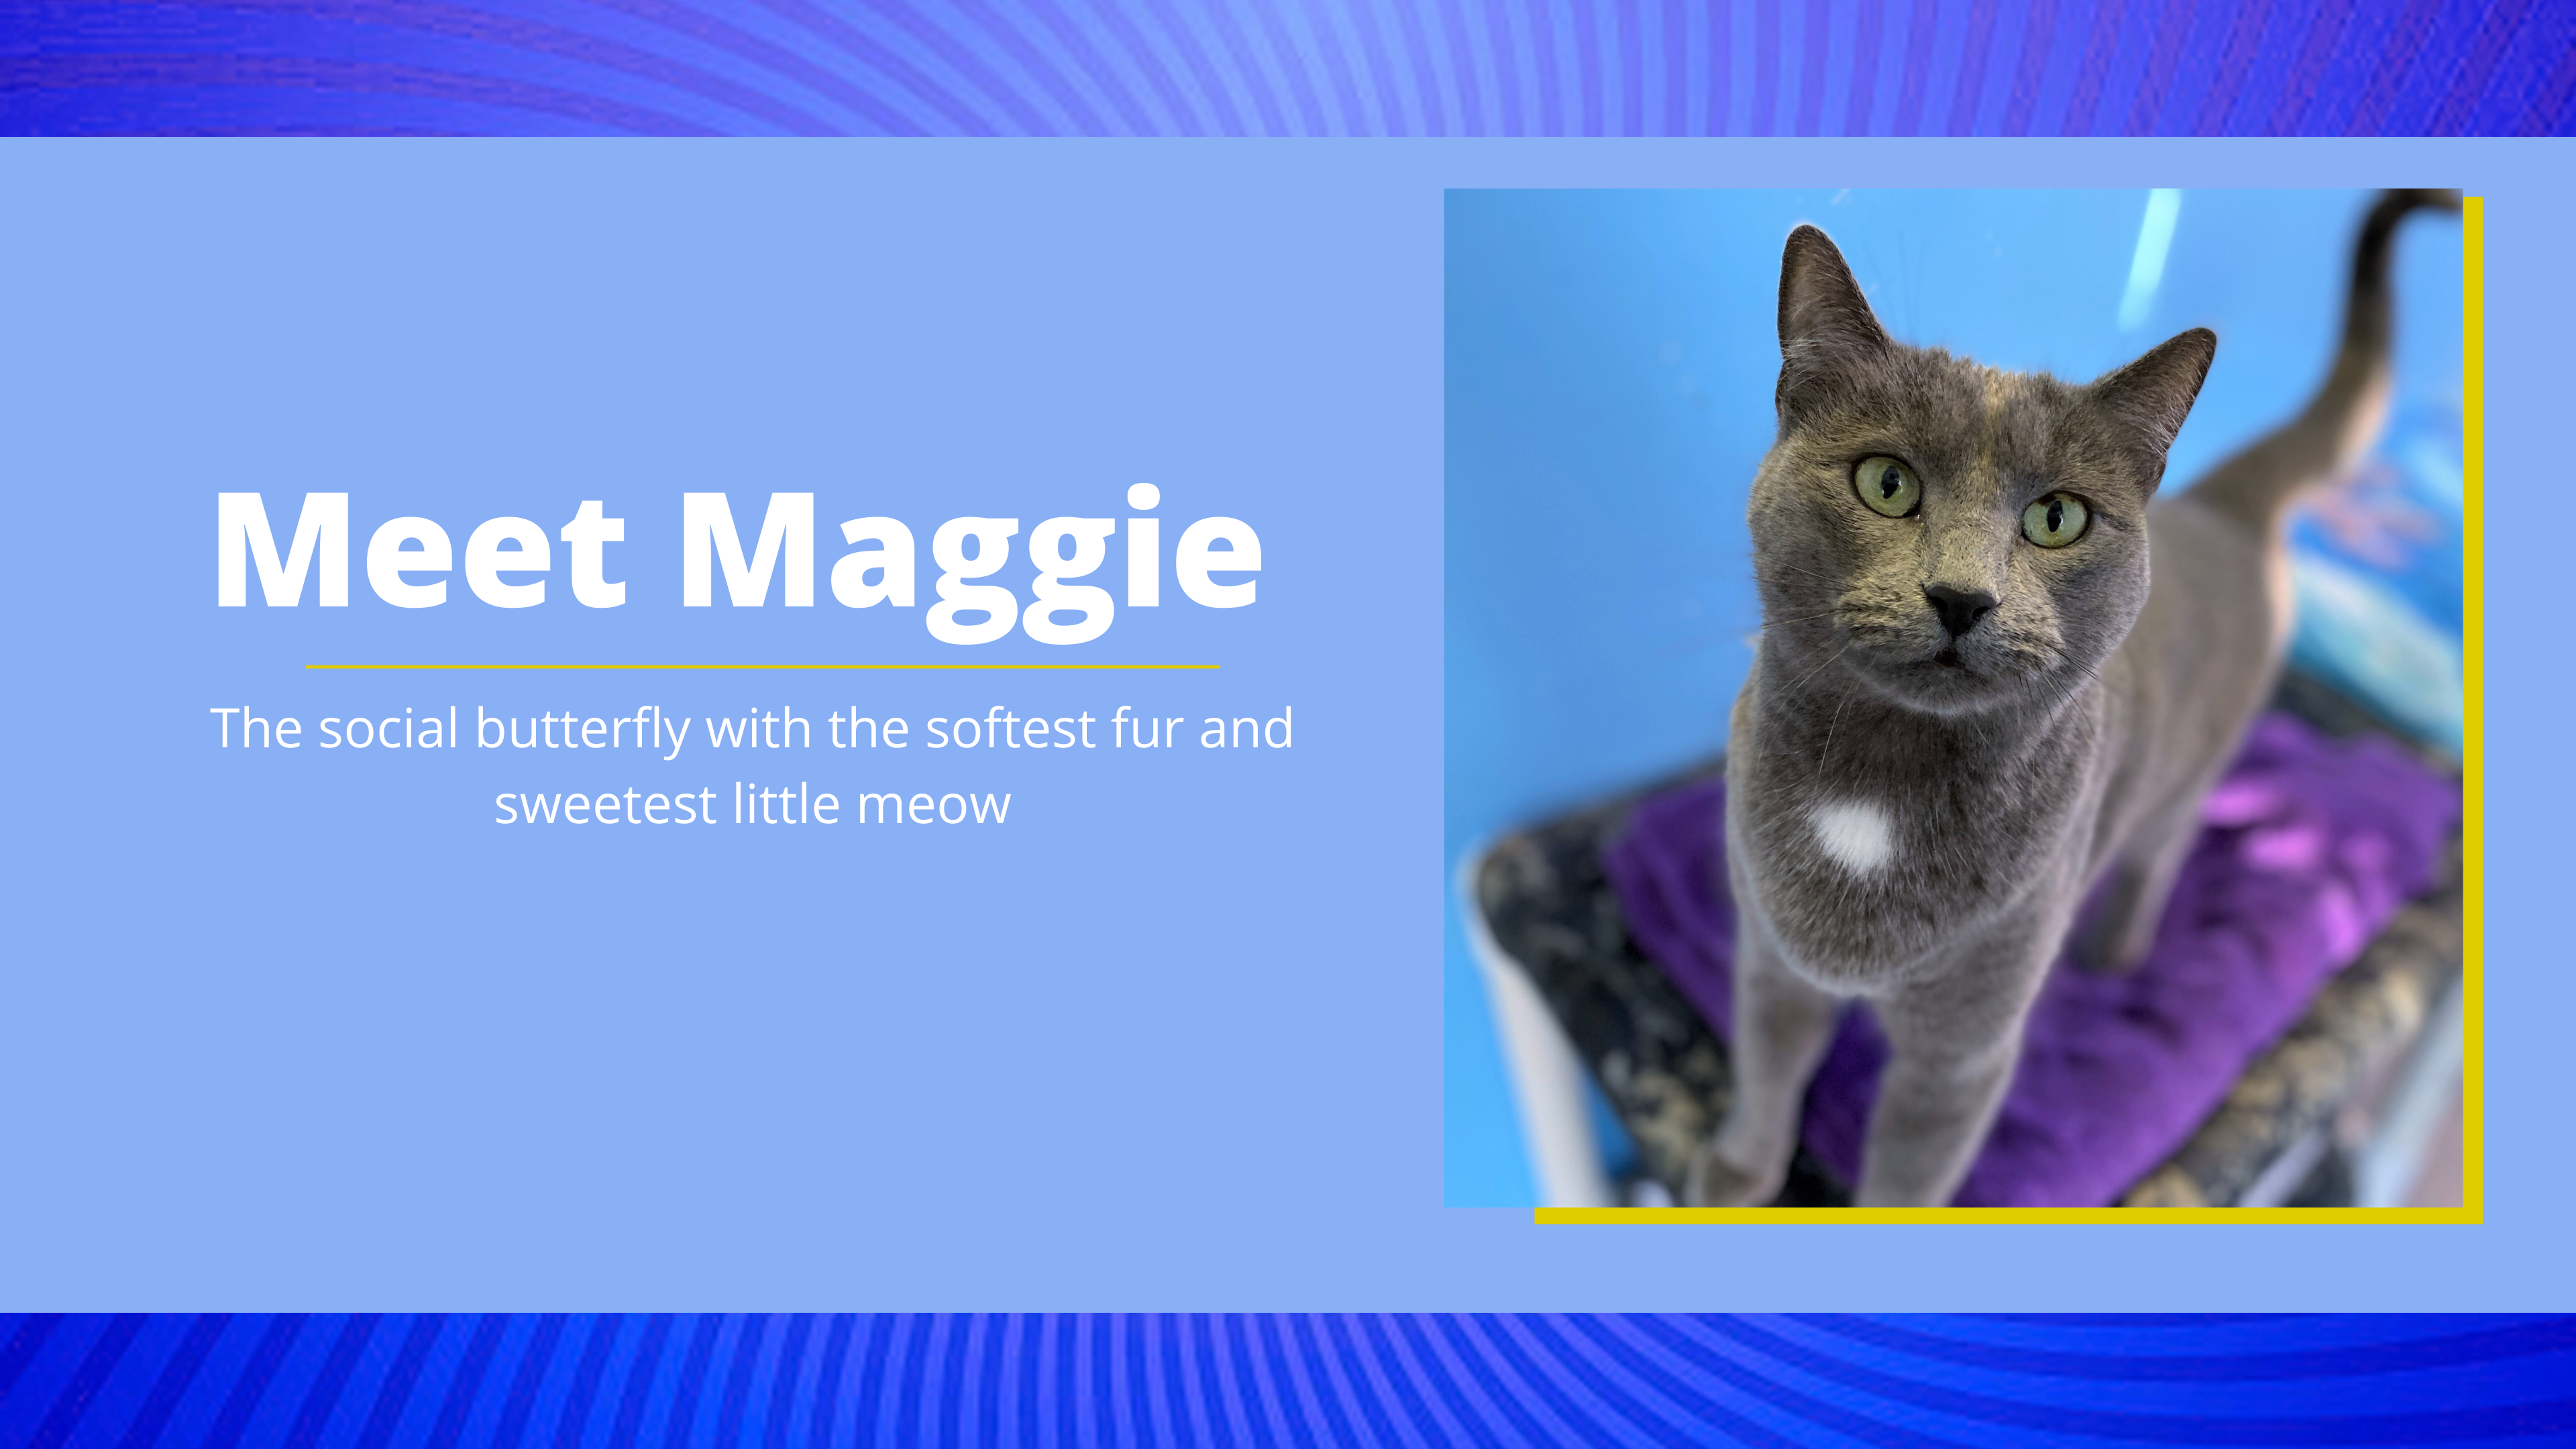 Meet Maggie